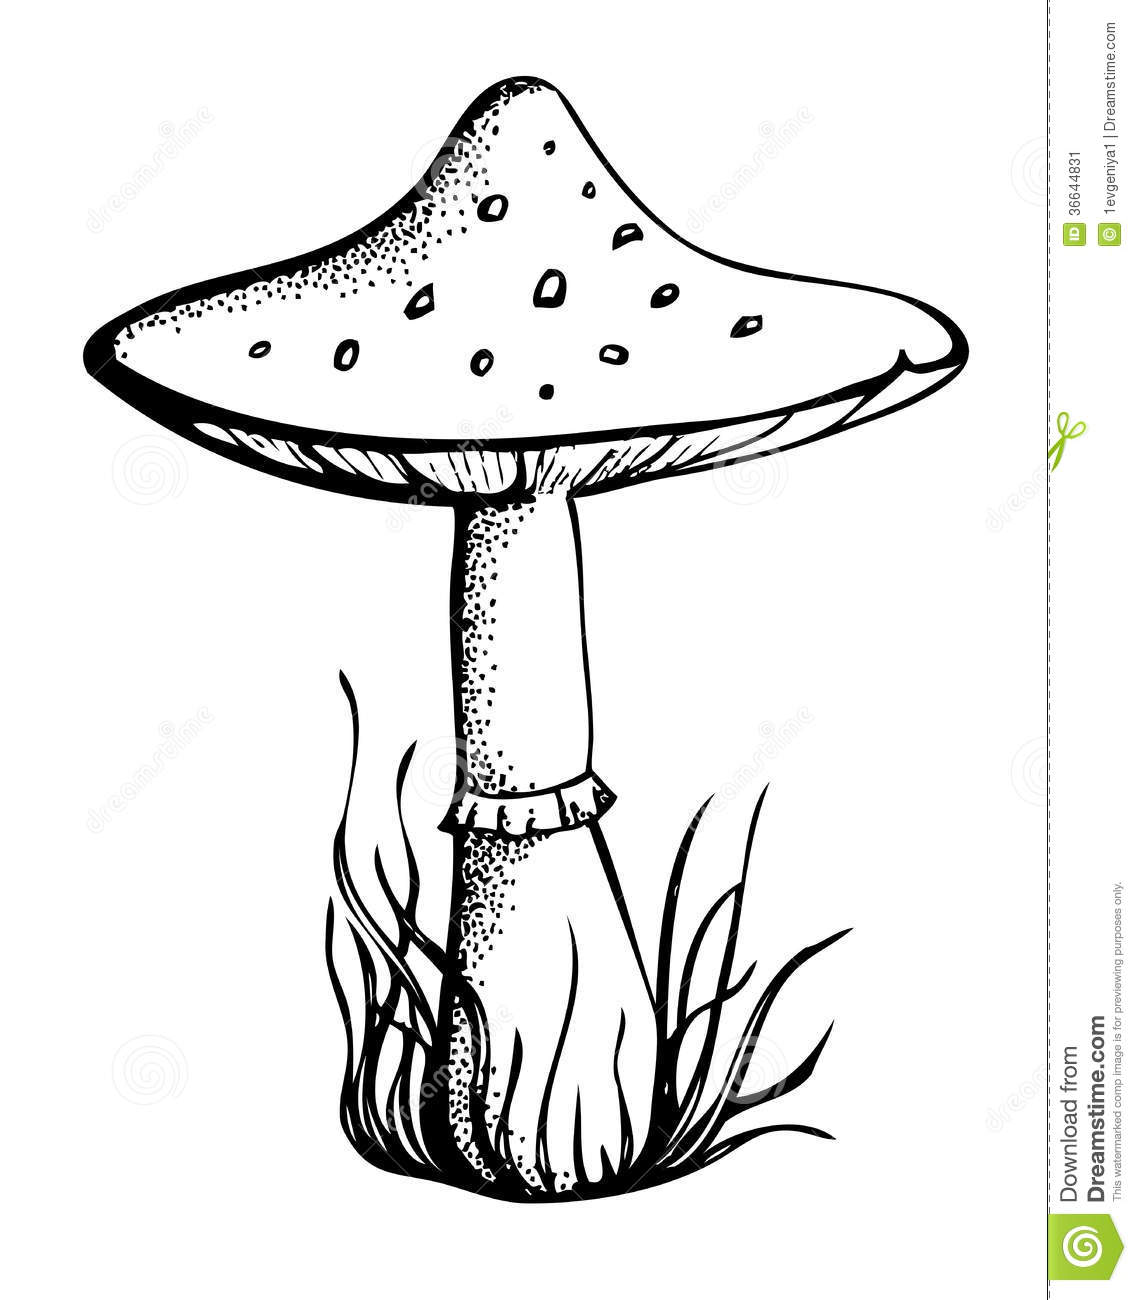 Graphical Monochrome Black And White Mushroom Draw Stock Image   Image